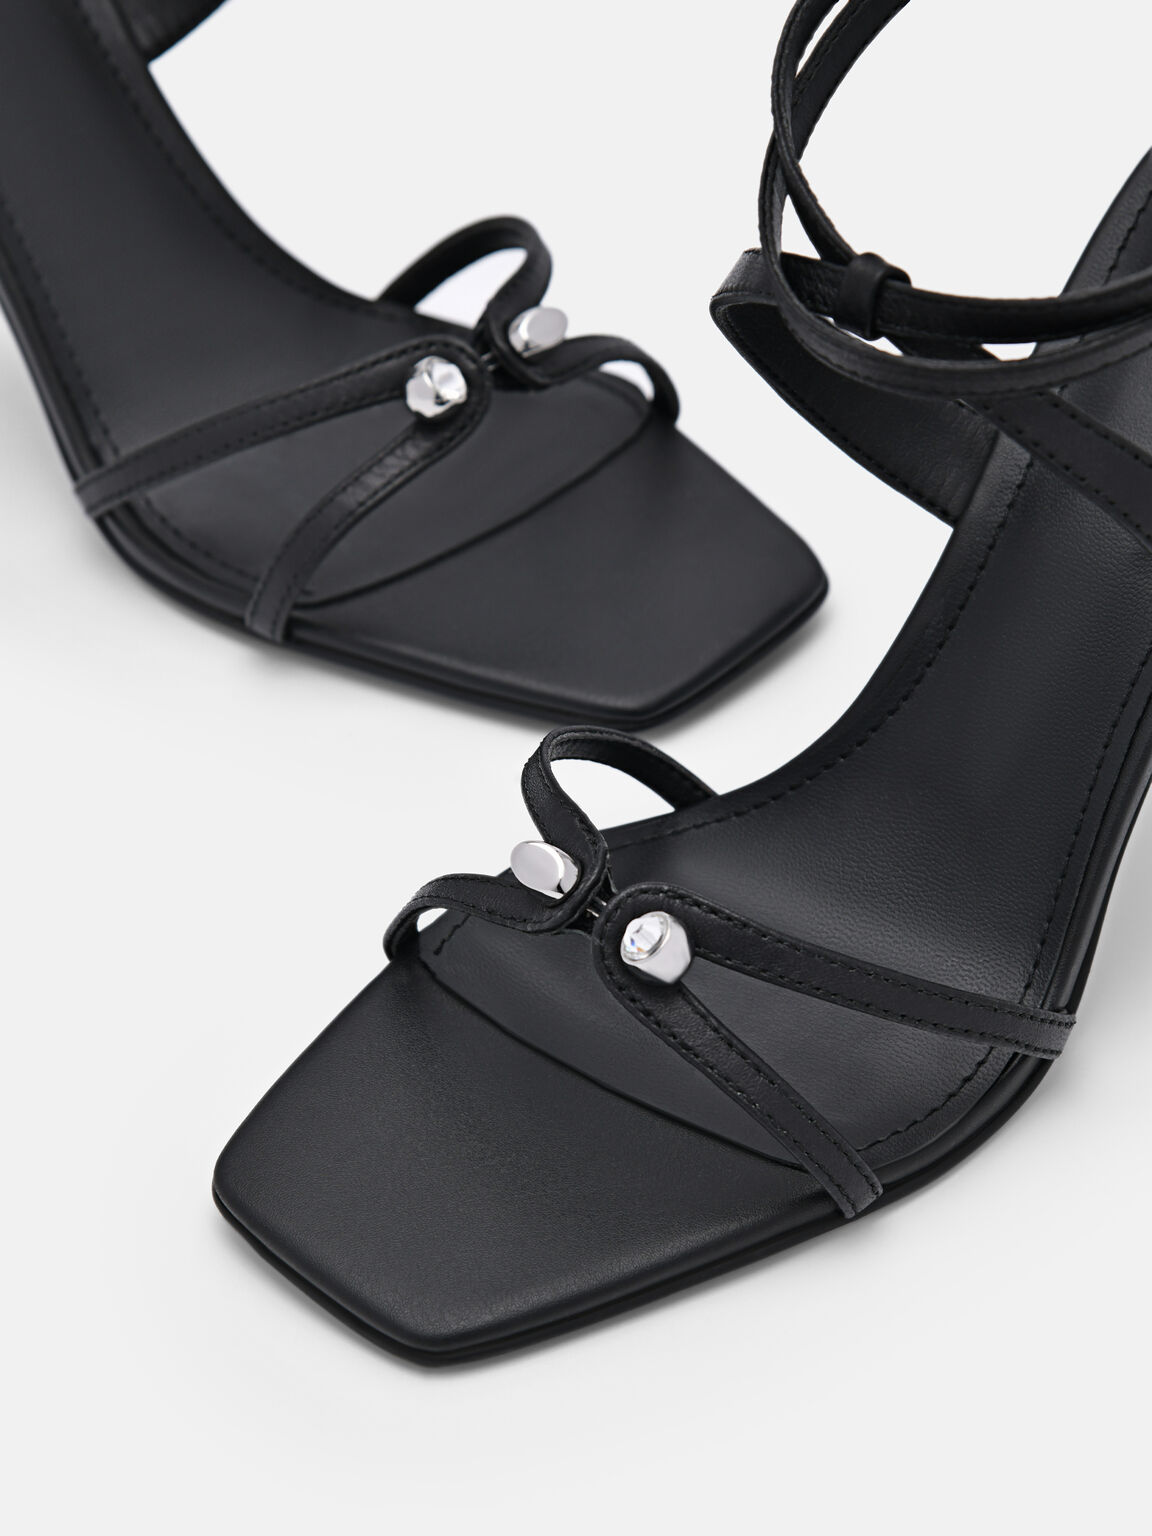 Sofia Leather Heel Sandals, Black, hi-res